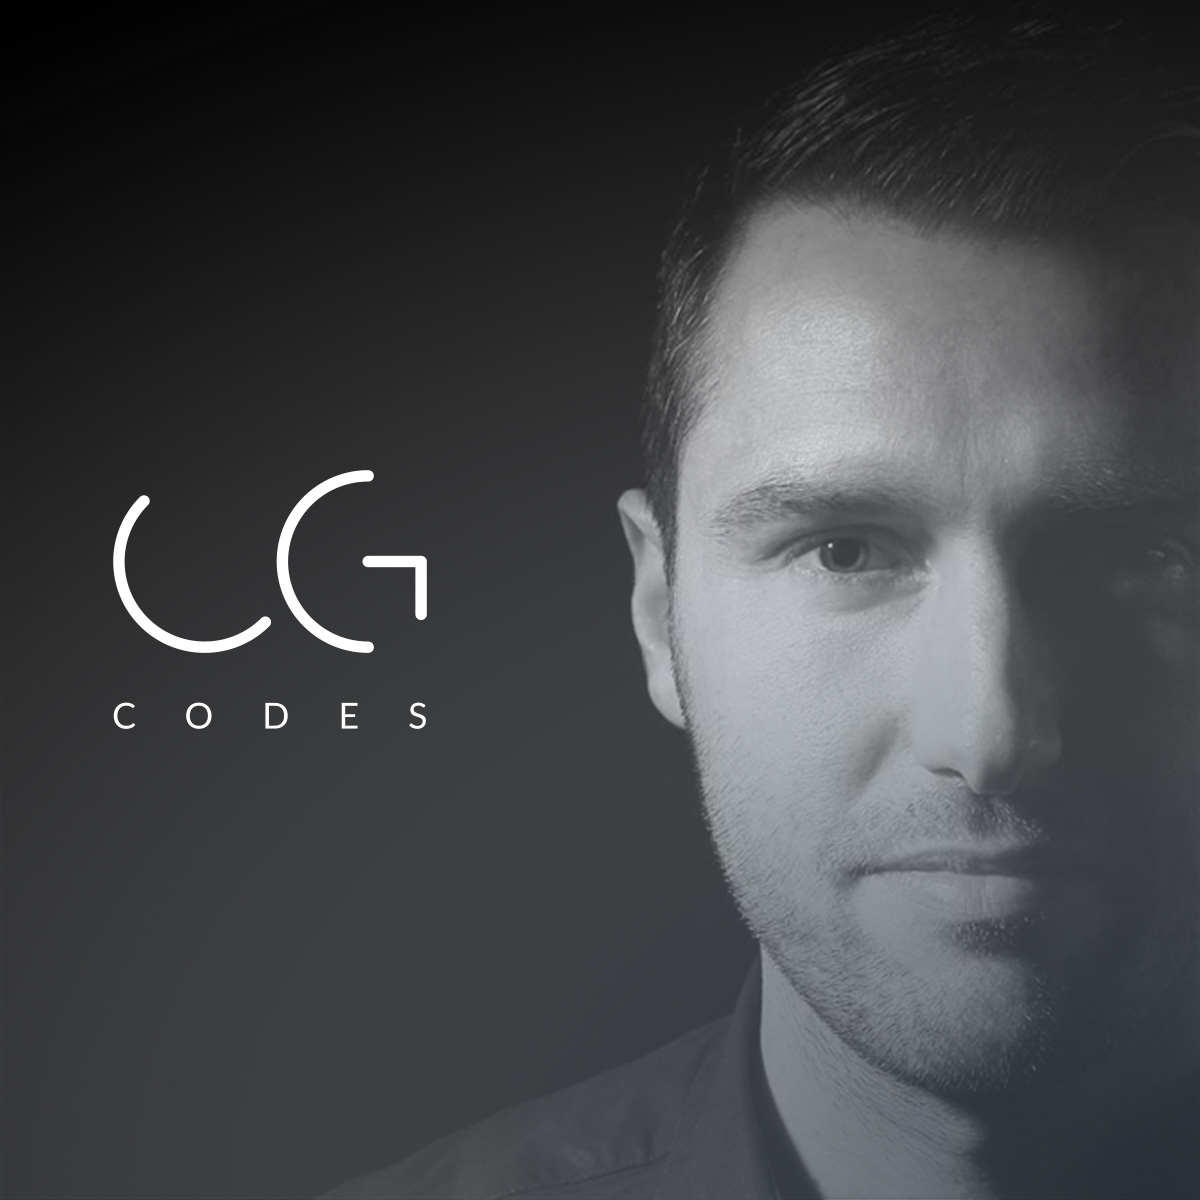 (c) Cg-codes.com